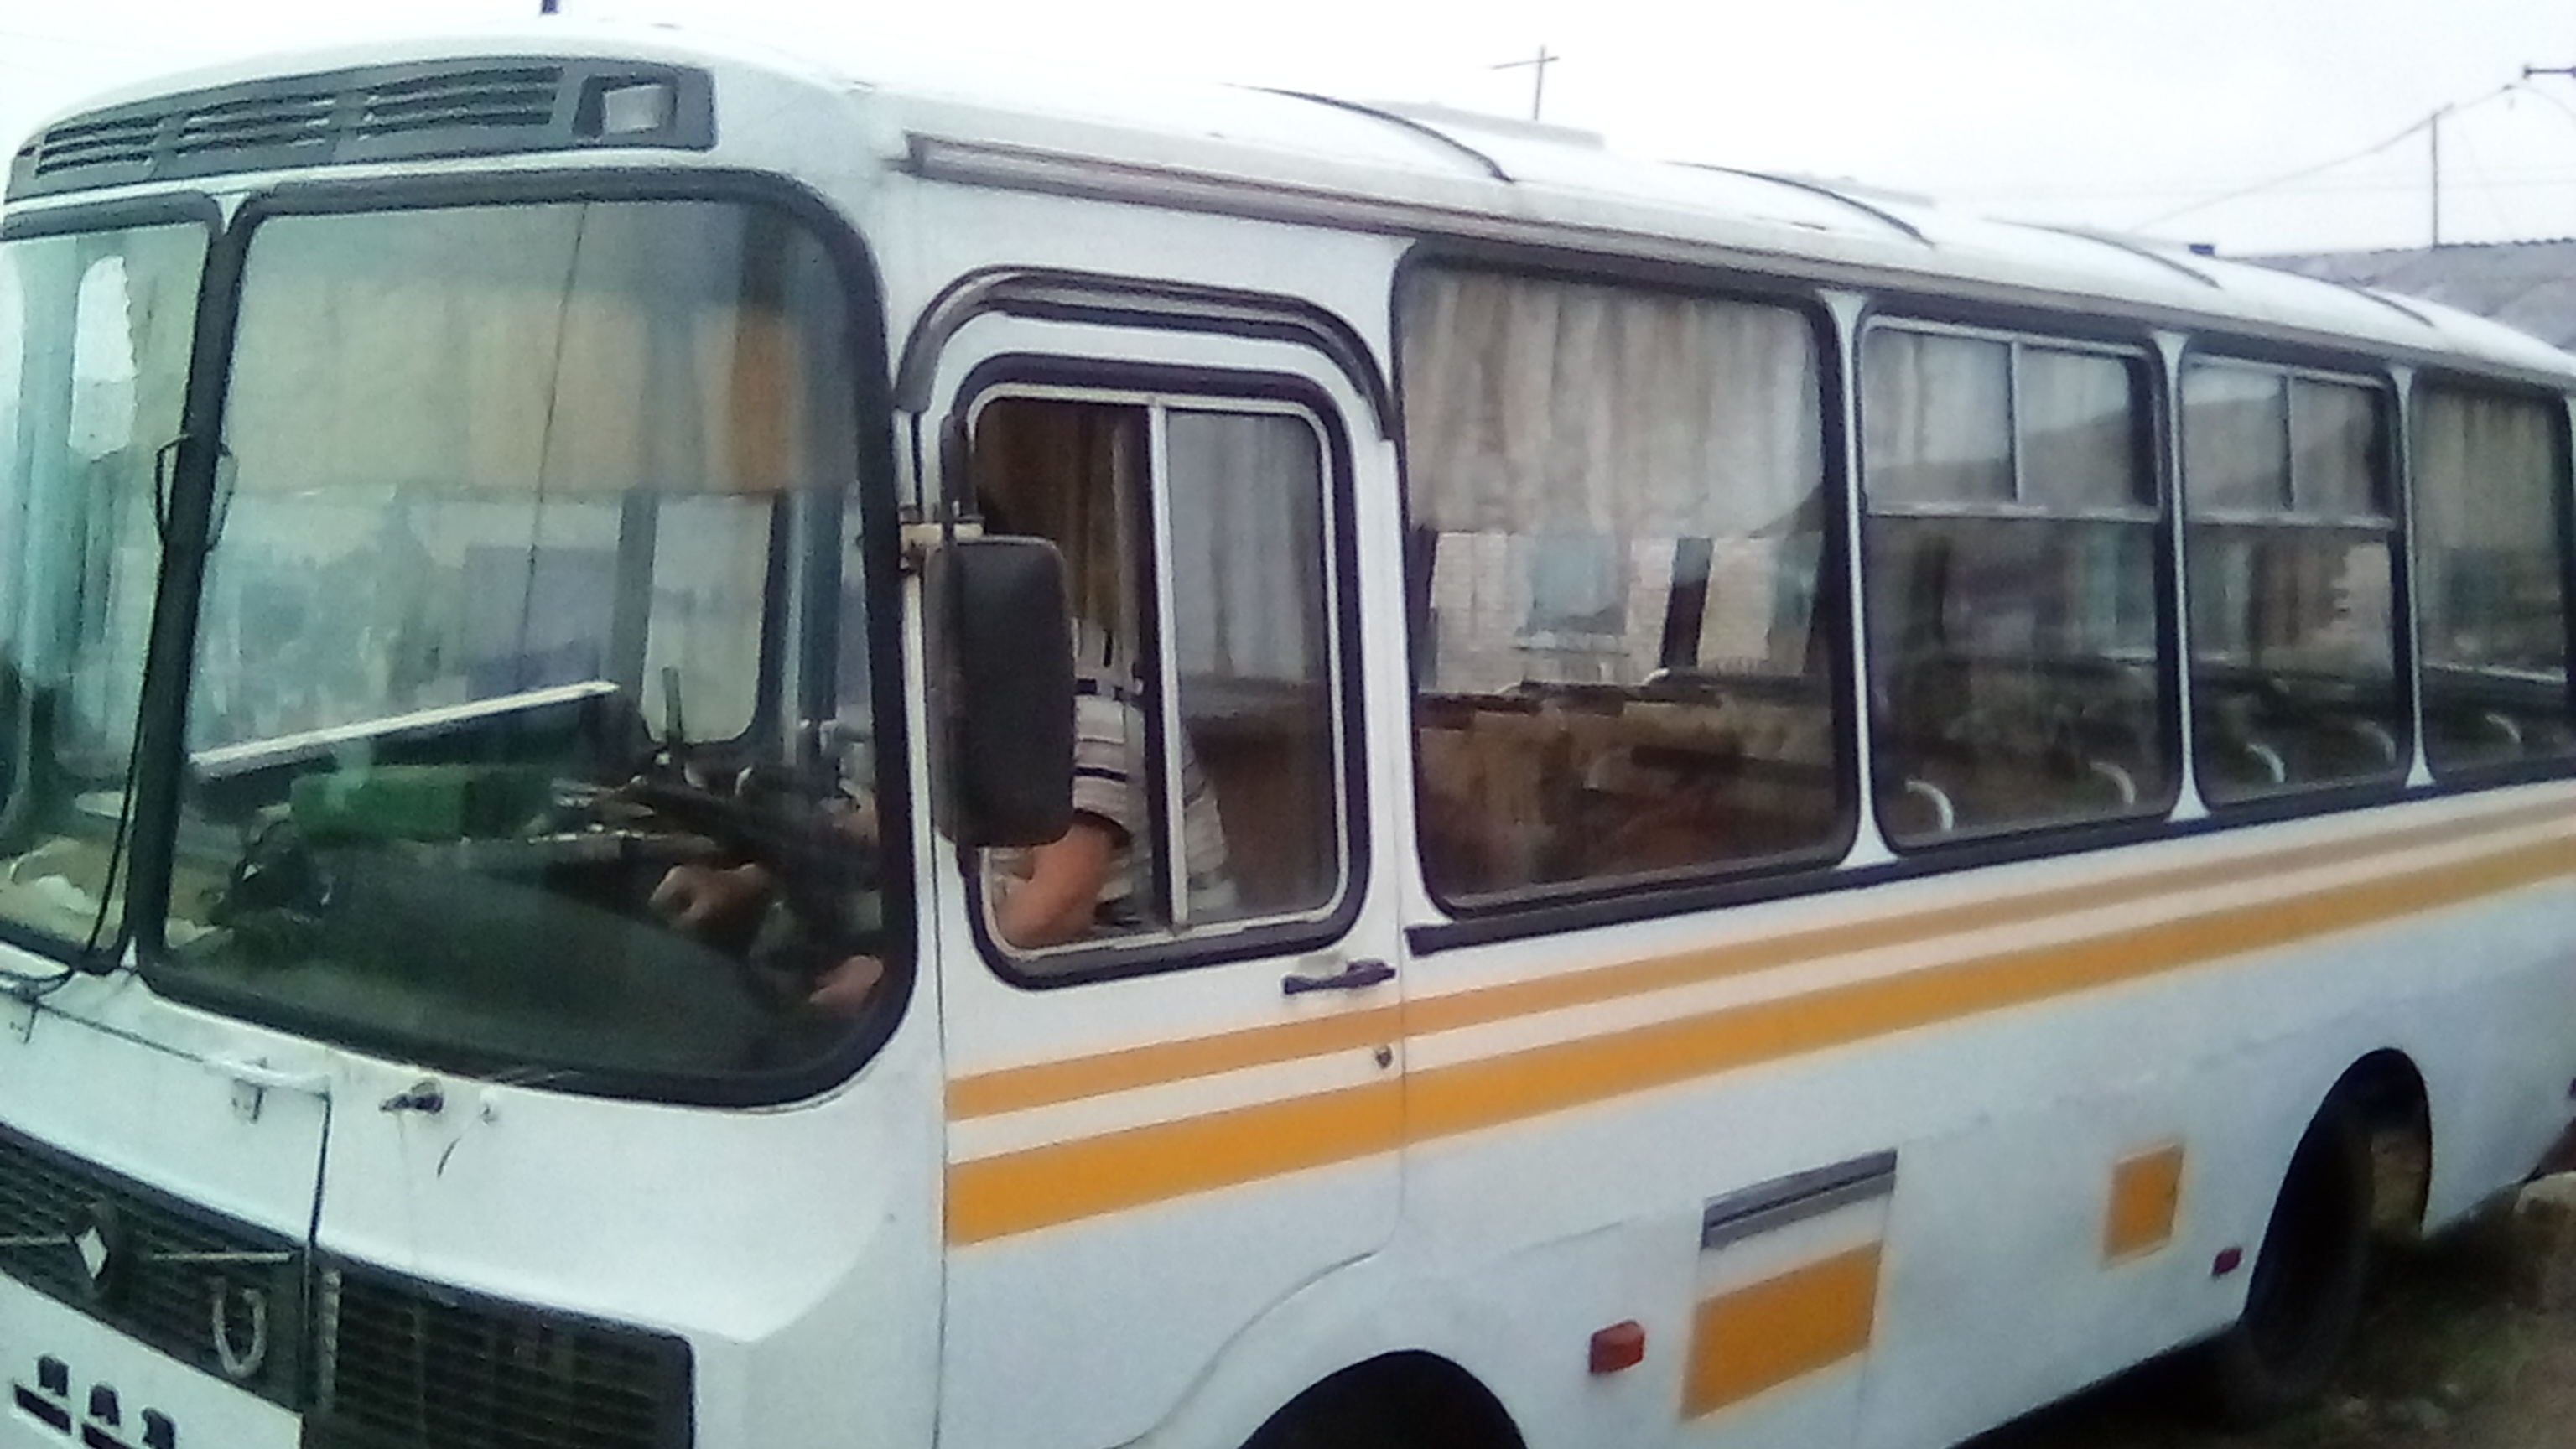  Автобус ПАЗ - 32050R -1999 г в городе Барнаул, фото 2, телефон продавца: +7 (964) 603-34-97